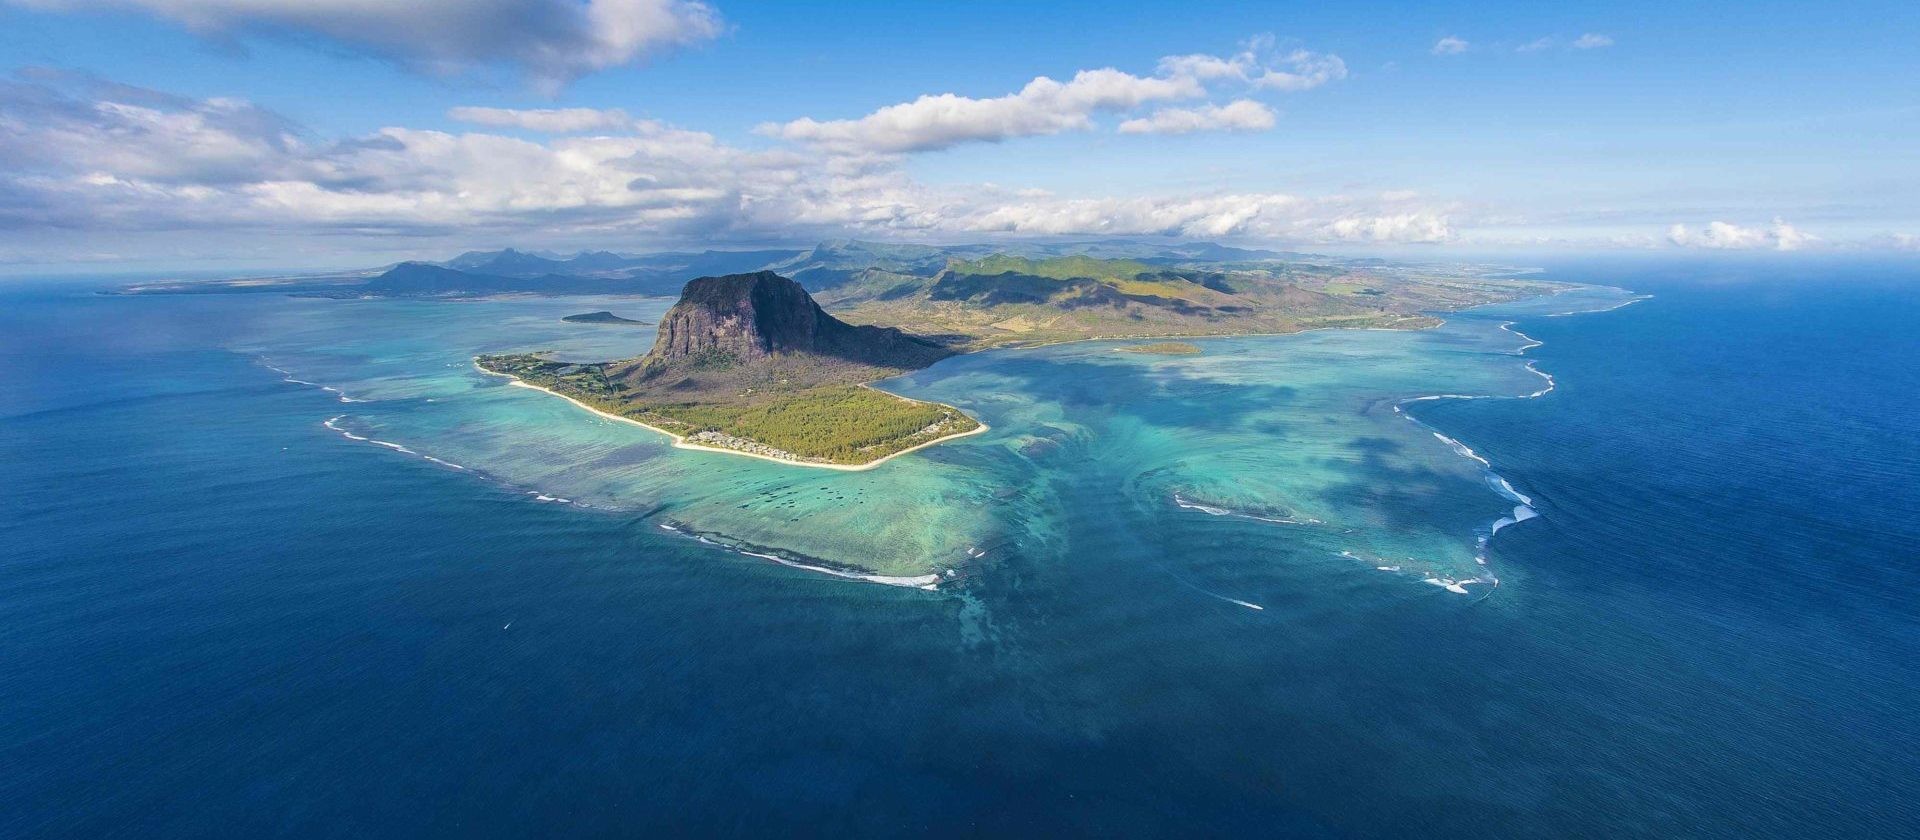 Mauritius, Oceano Indiano: Crociera in catamarano